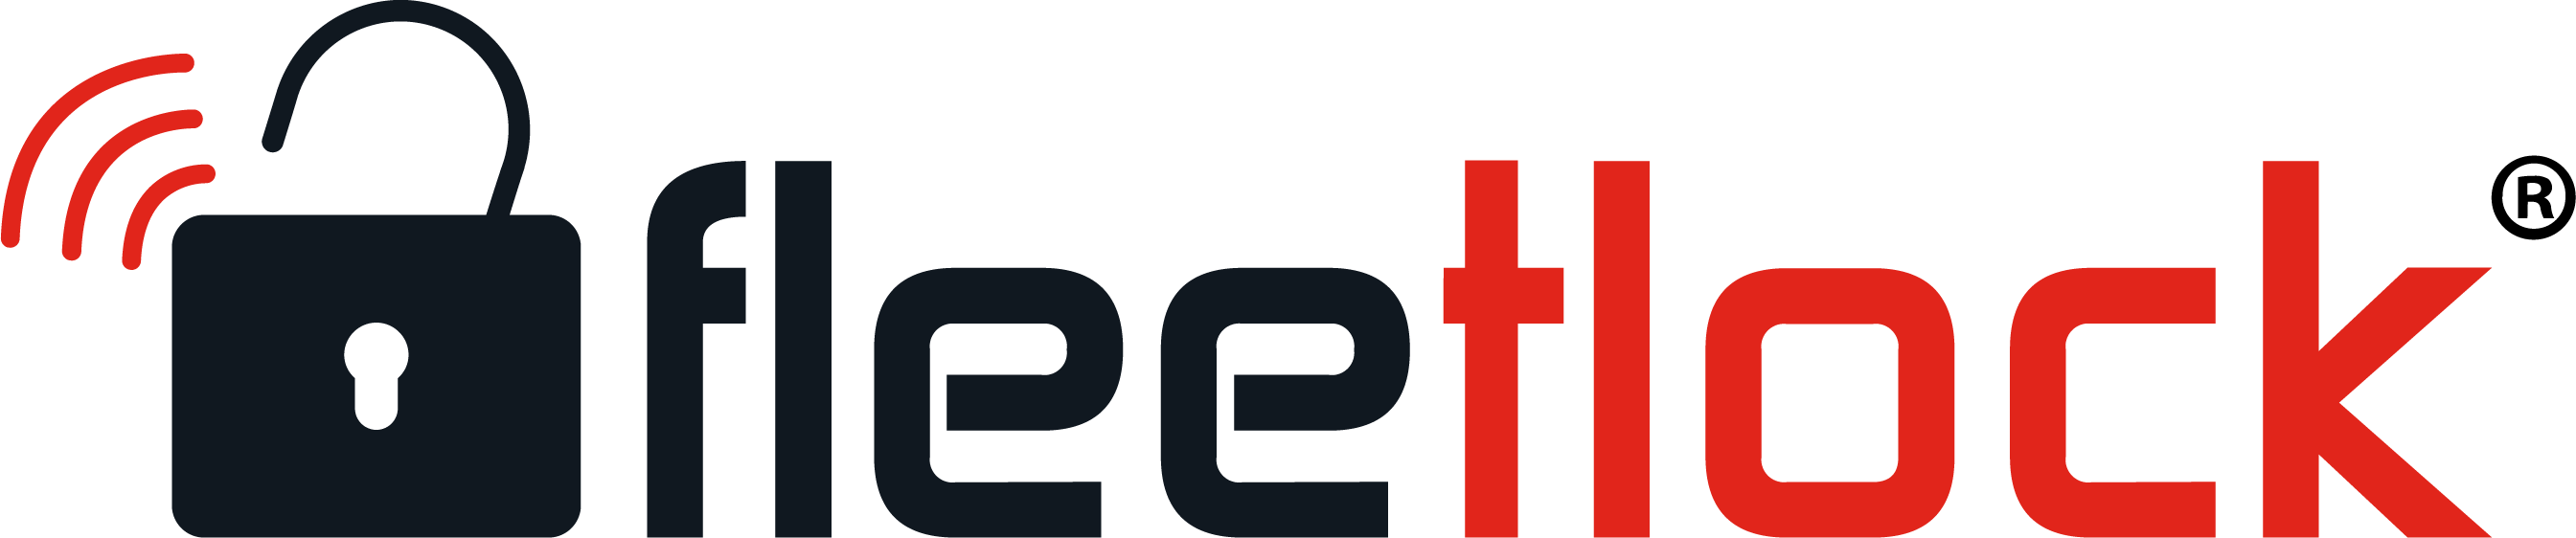 fleetlock logo